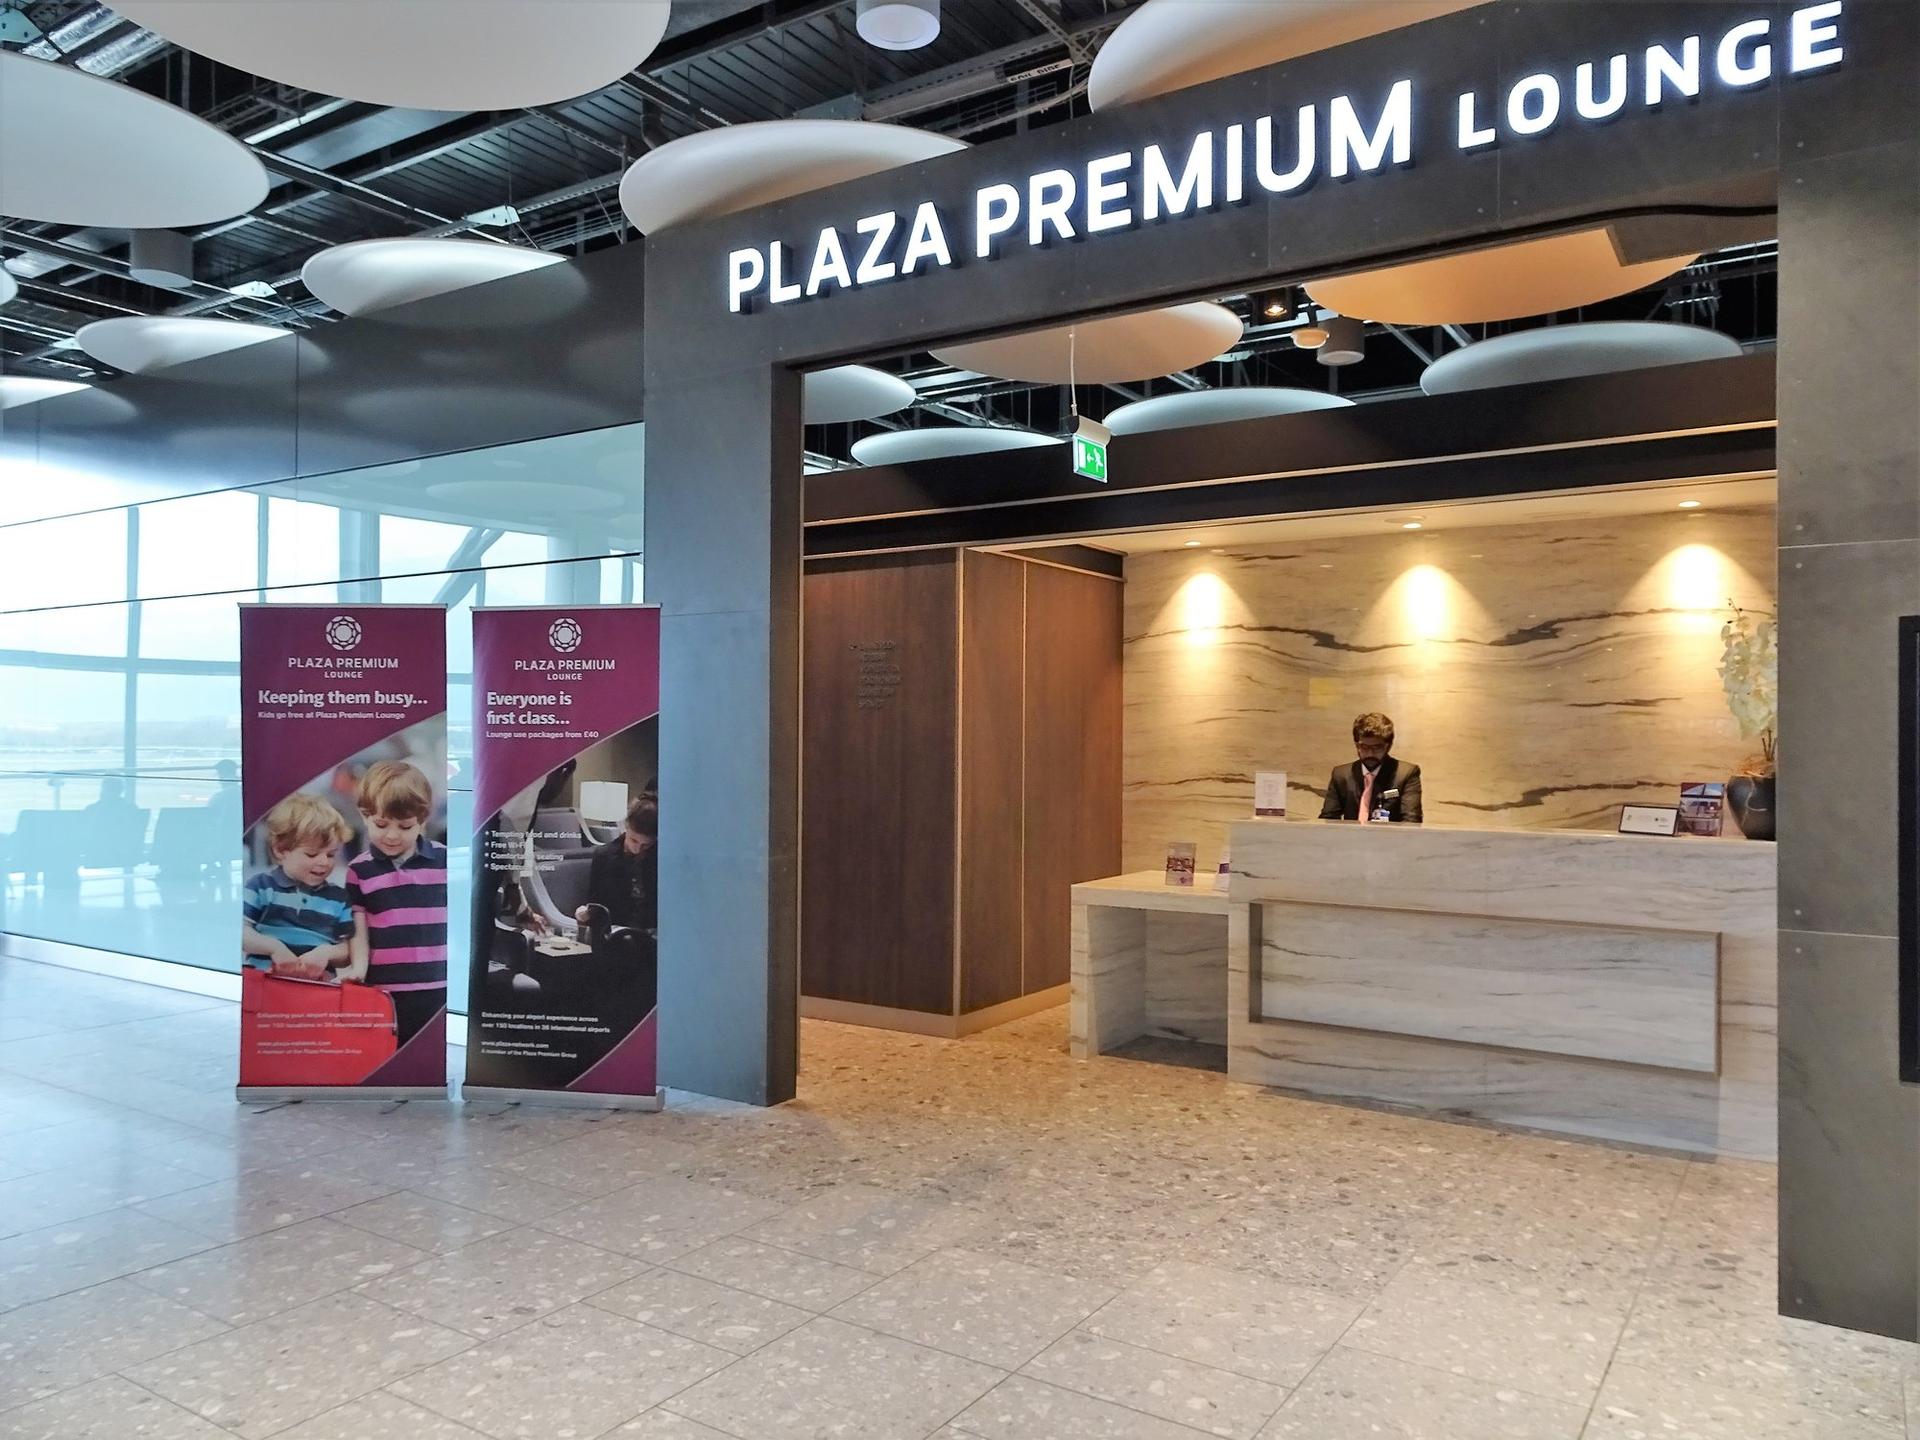 Plaza Premium Lounge image 3 of 65